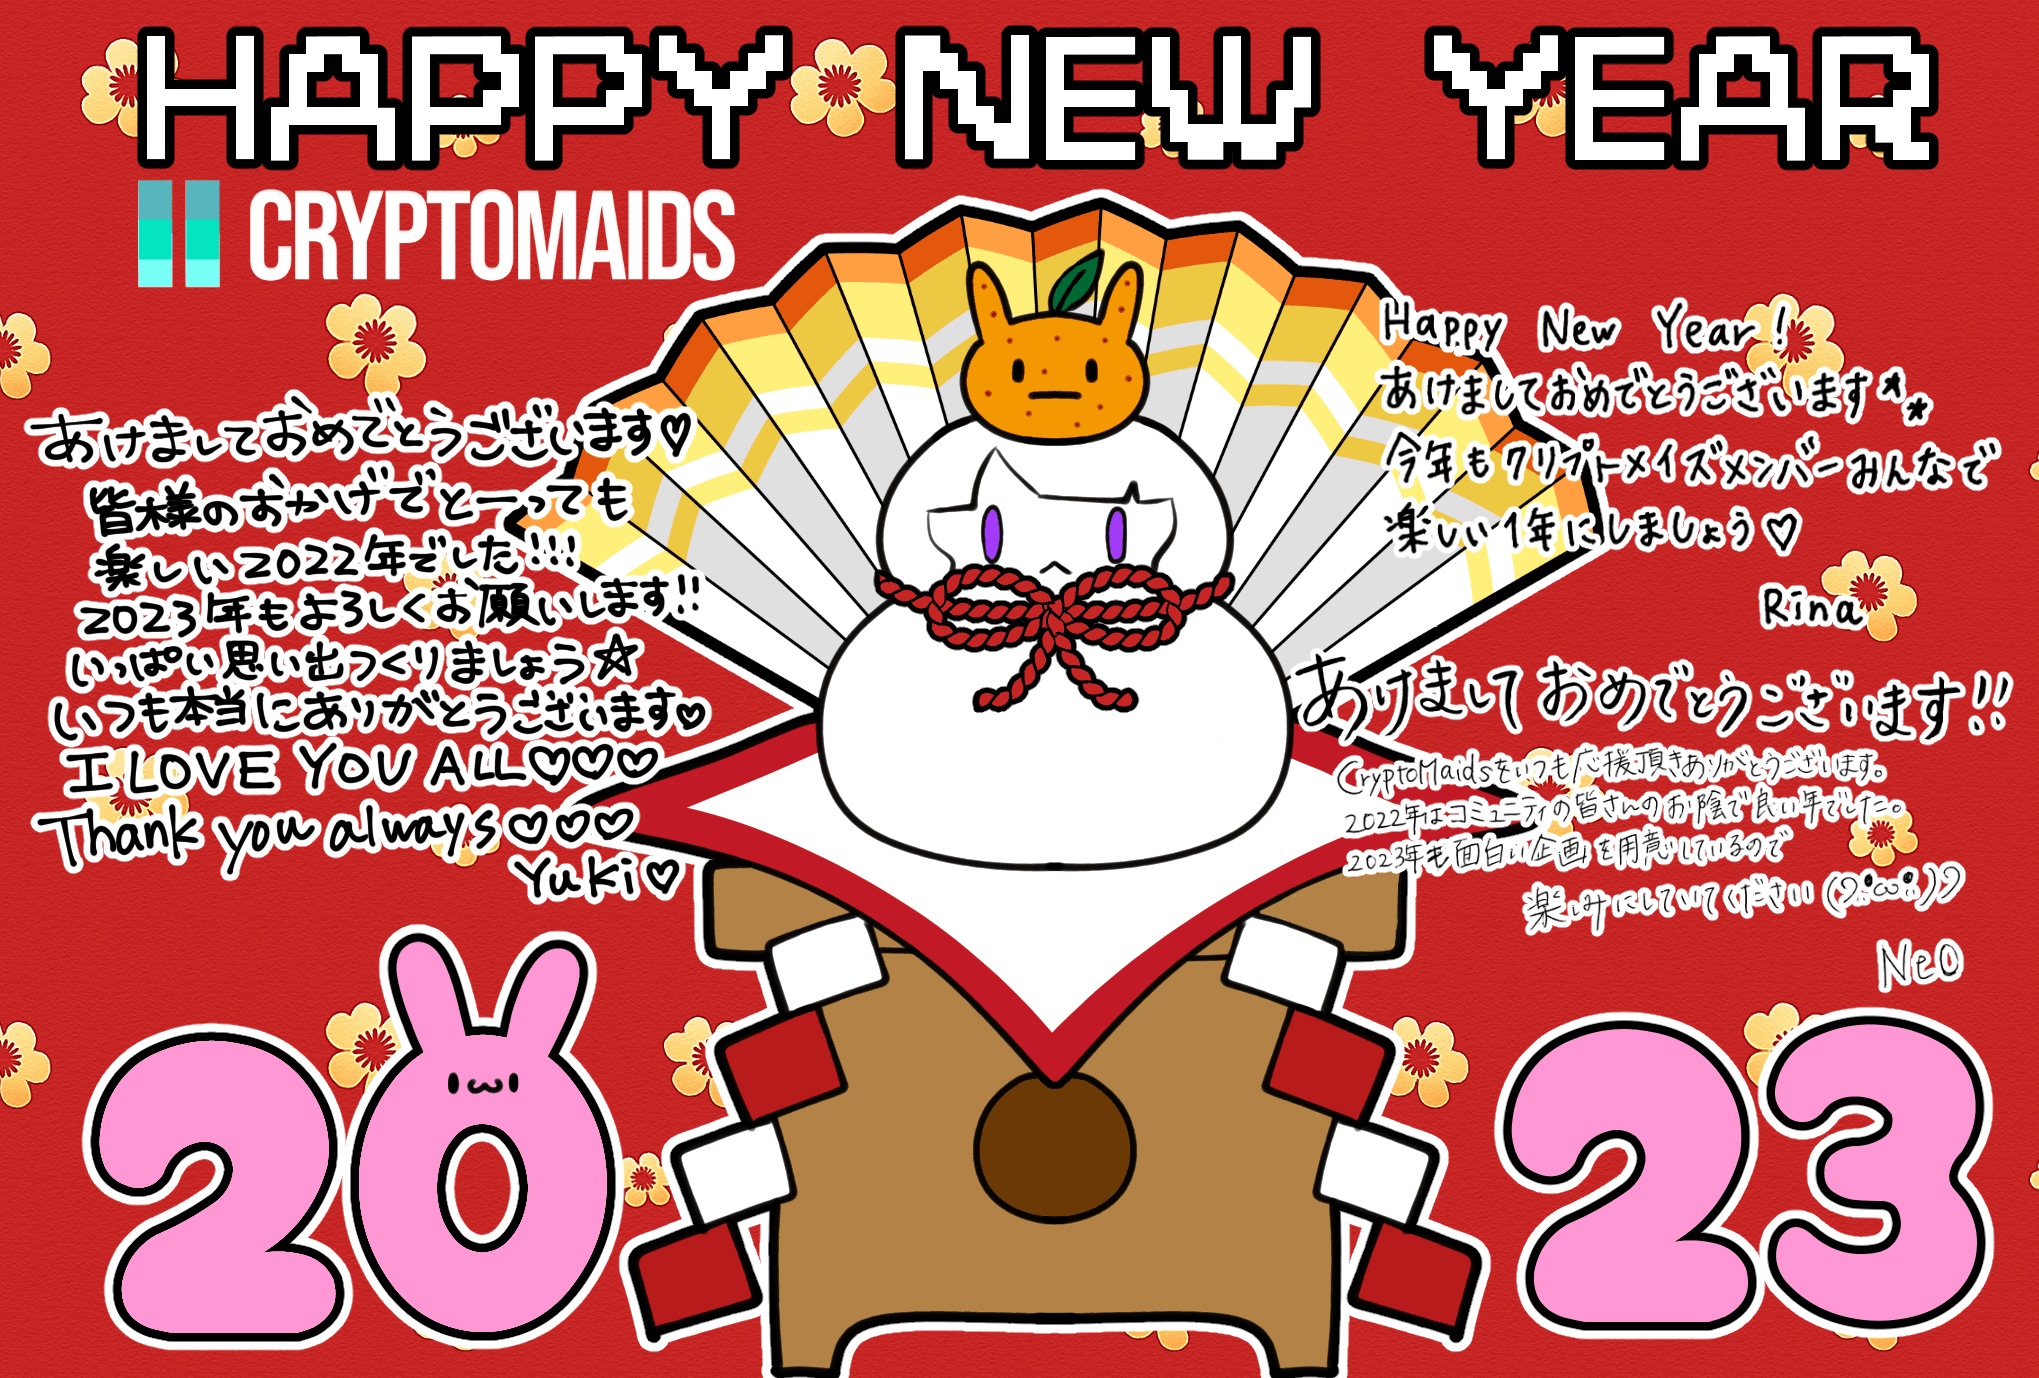 2023 CryptoMaids HAPPY NEW YEAR!